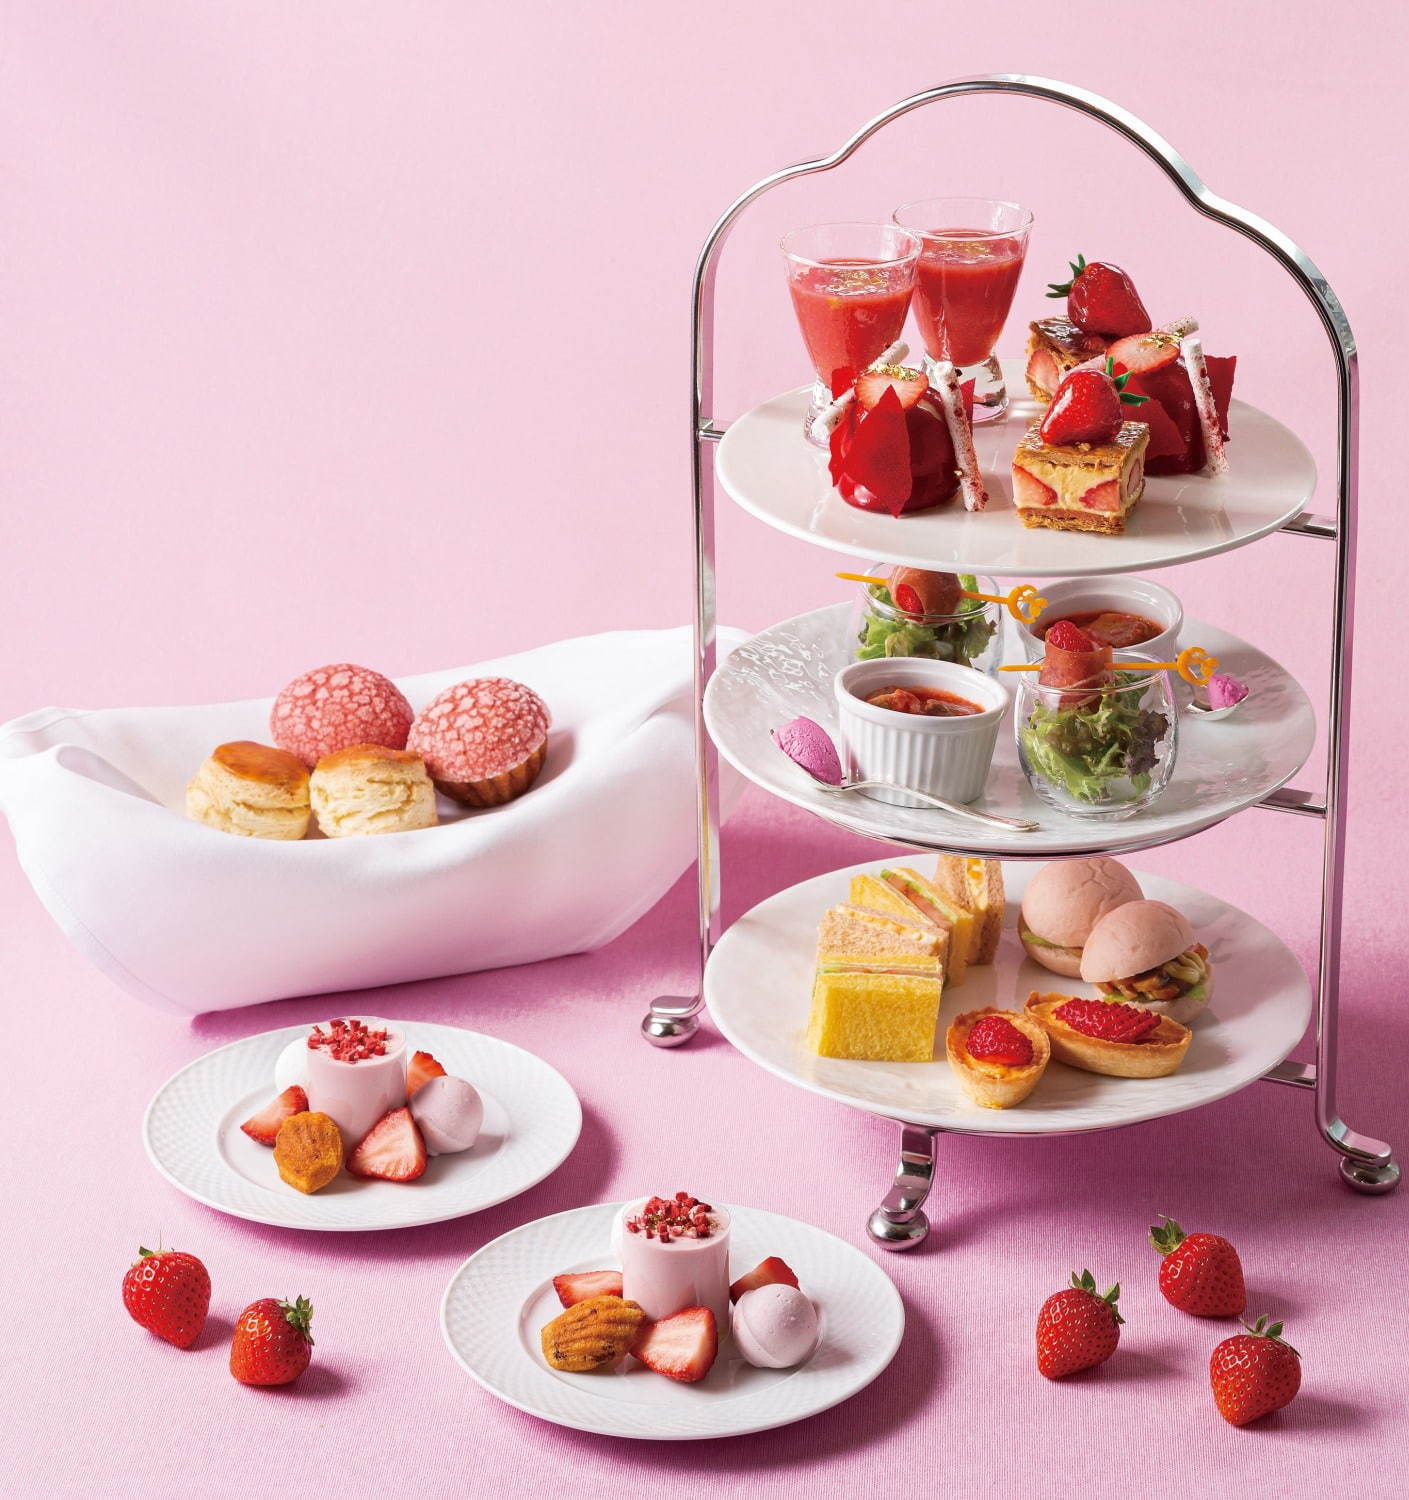 Strawberry Afternoon Tea Season 2　5,500円
※消費税込、サービス料別